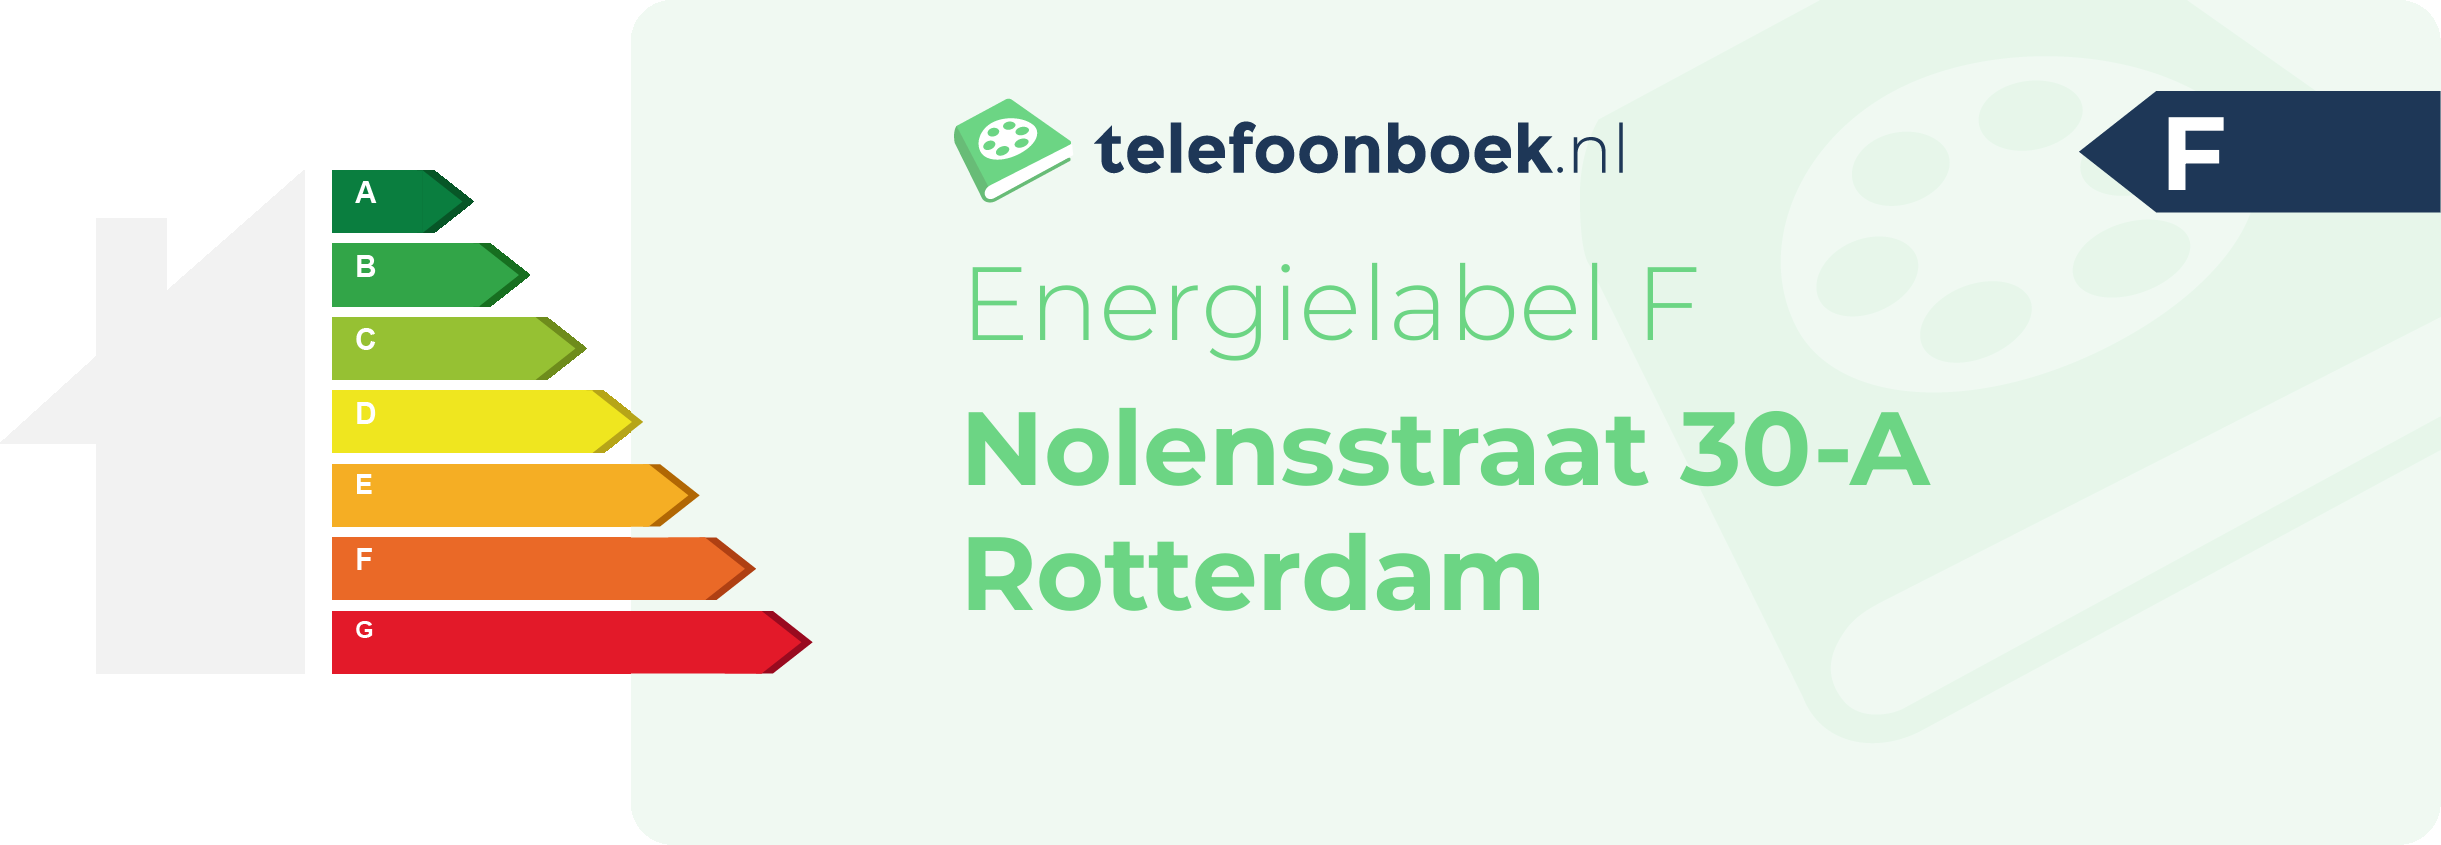 Energielabel Nolensstraat 30-A Rotterdam